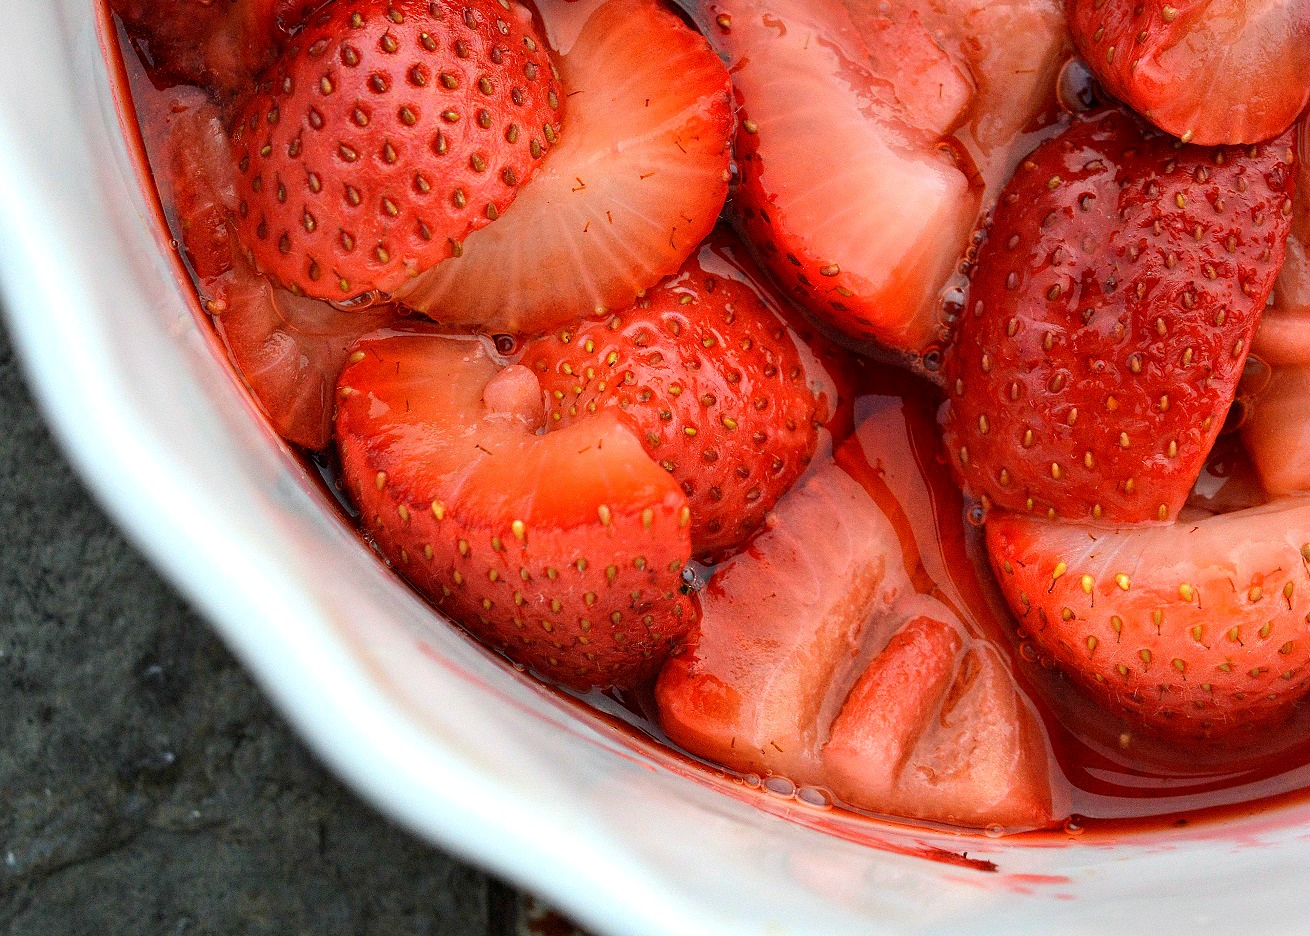 roasted strawberries